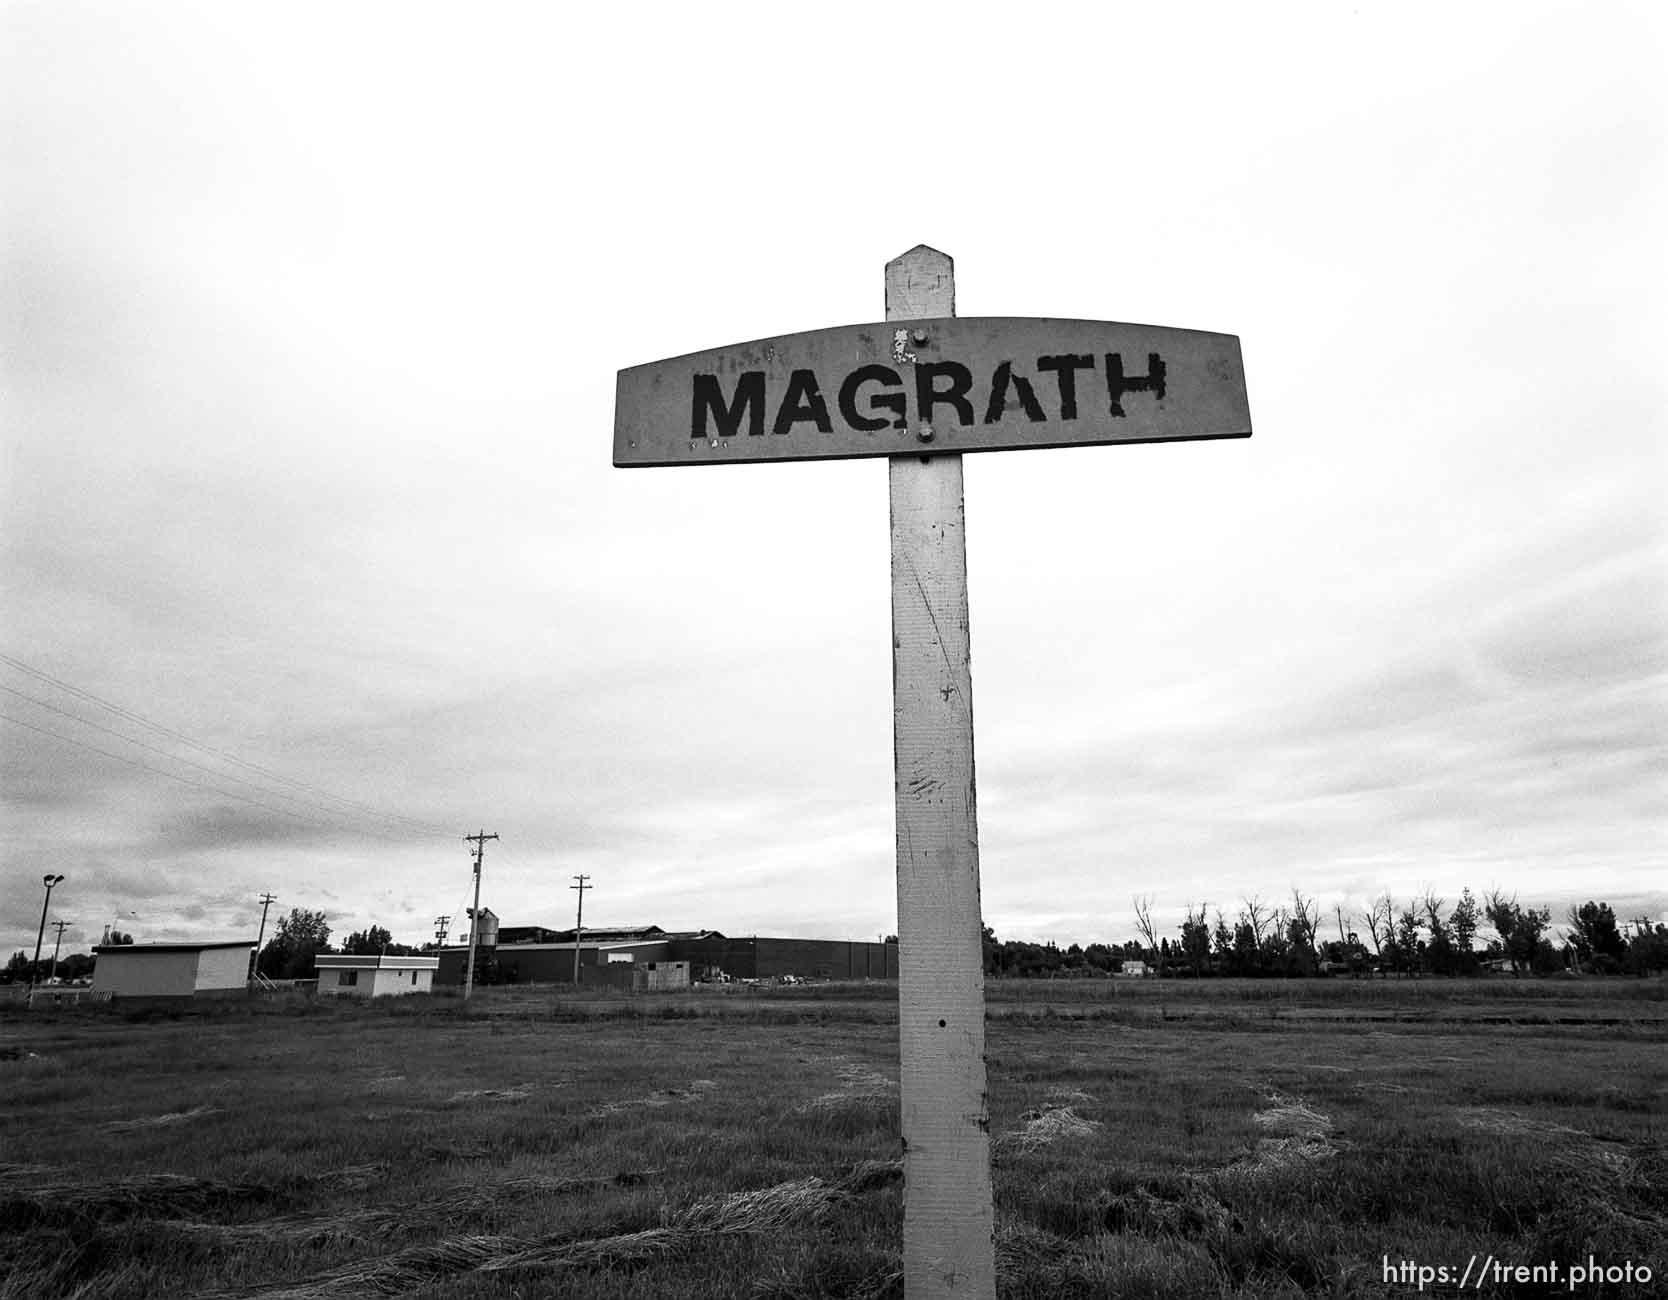 Magrath